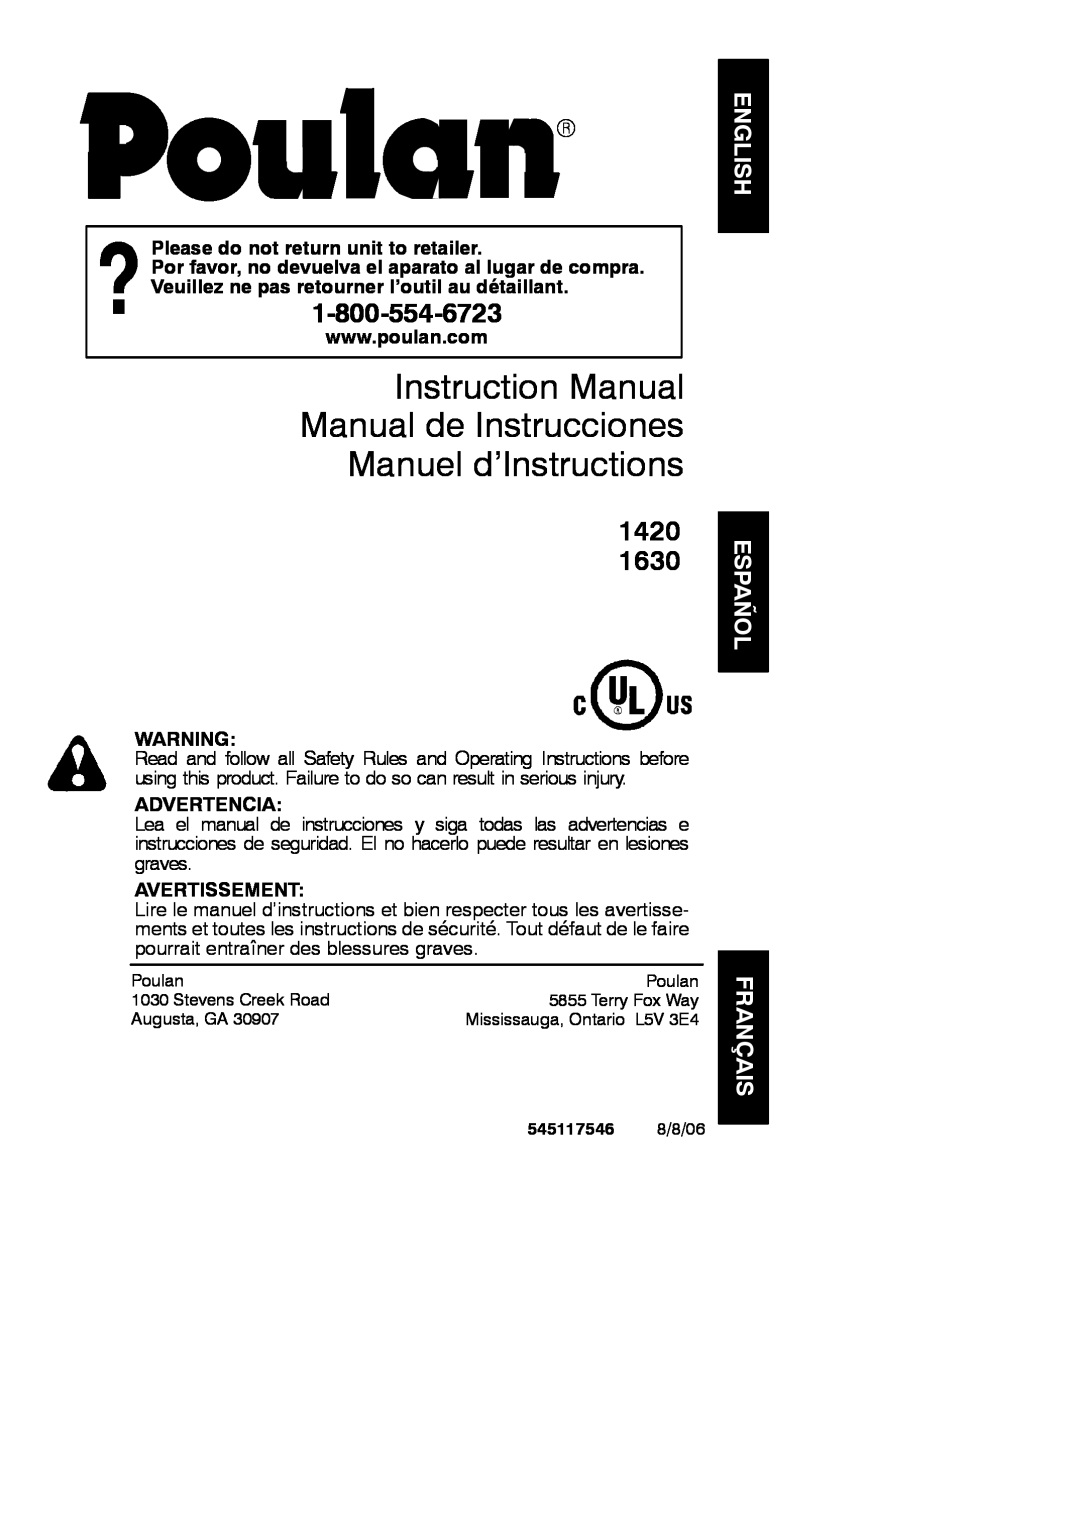 Poulan 545117546 instruction manual Español, Français, 1420, Please do not return unit to retailer, Advertencia 